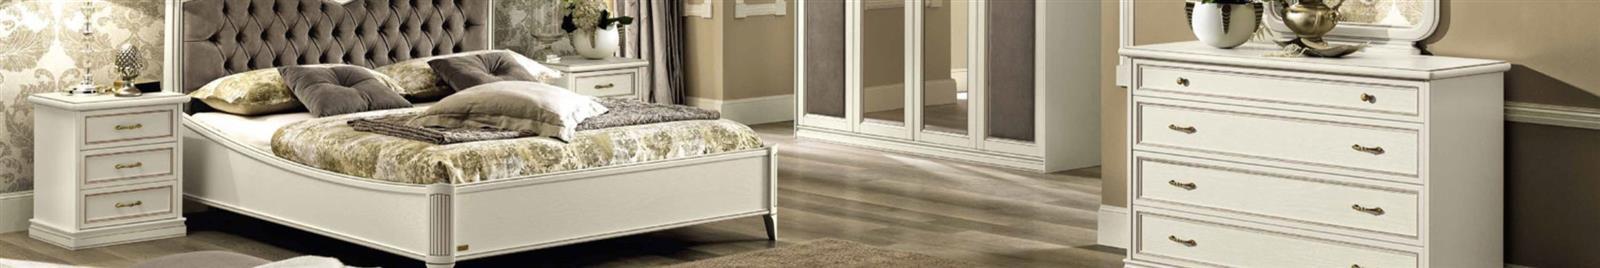 Nostalgia Bianco Antico Range - Italian Bedroom Furniture